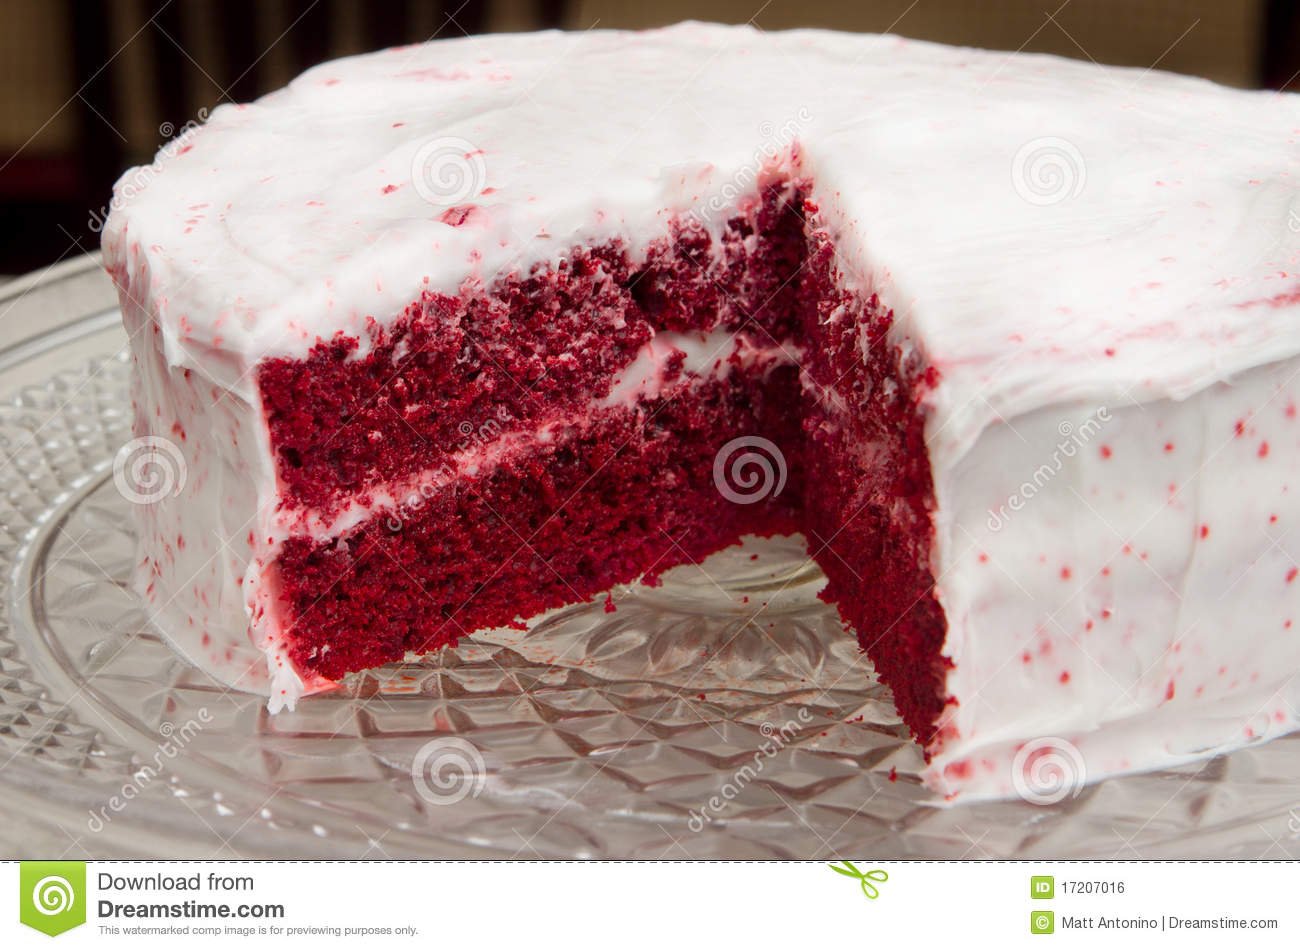 Red Velvet Cake Royalty Free Stock Image   Image  17207016